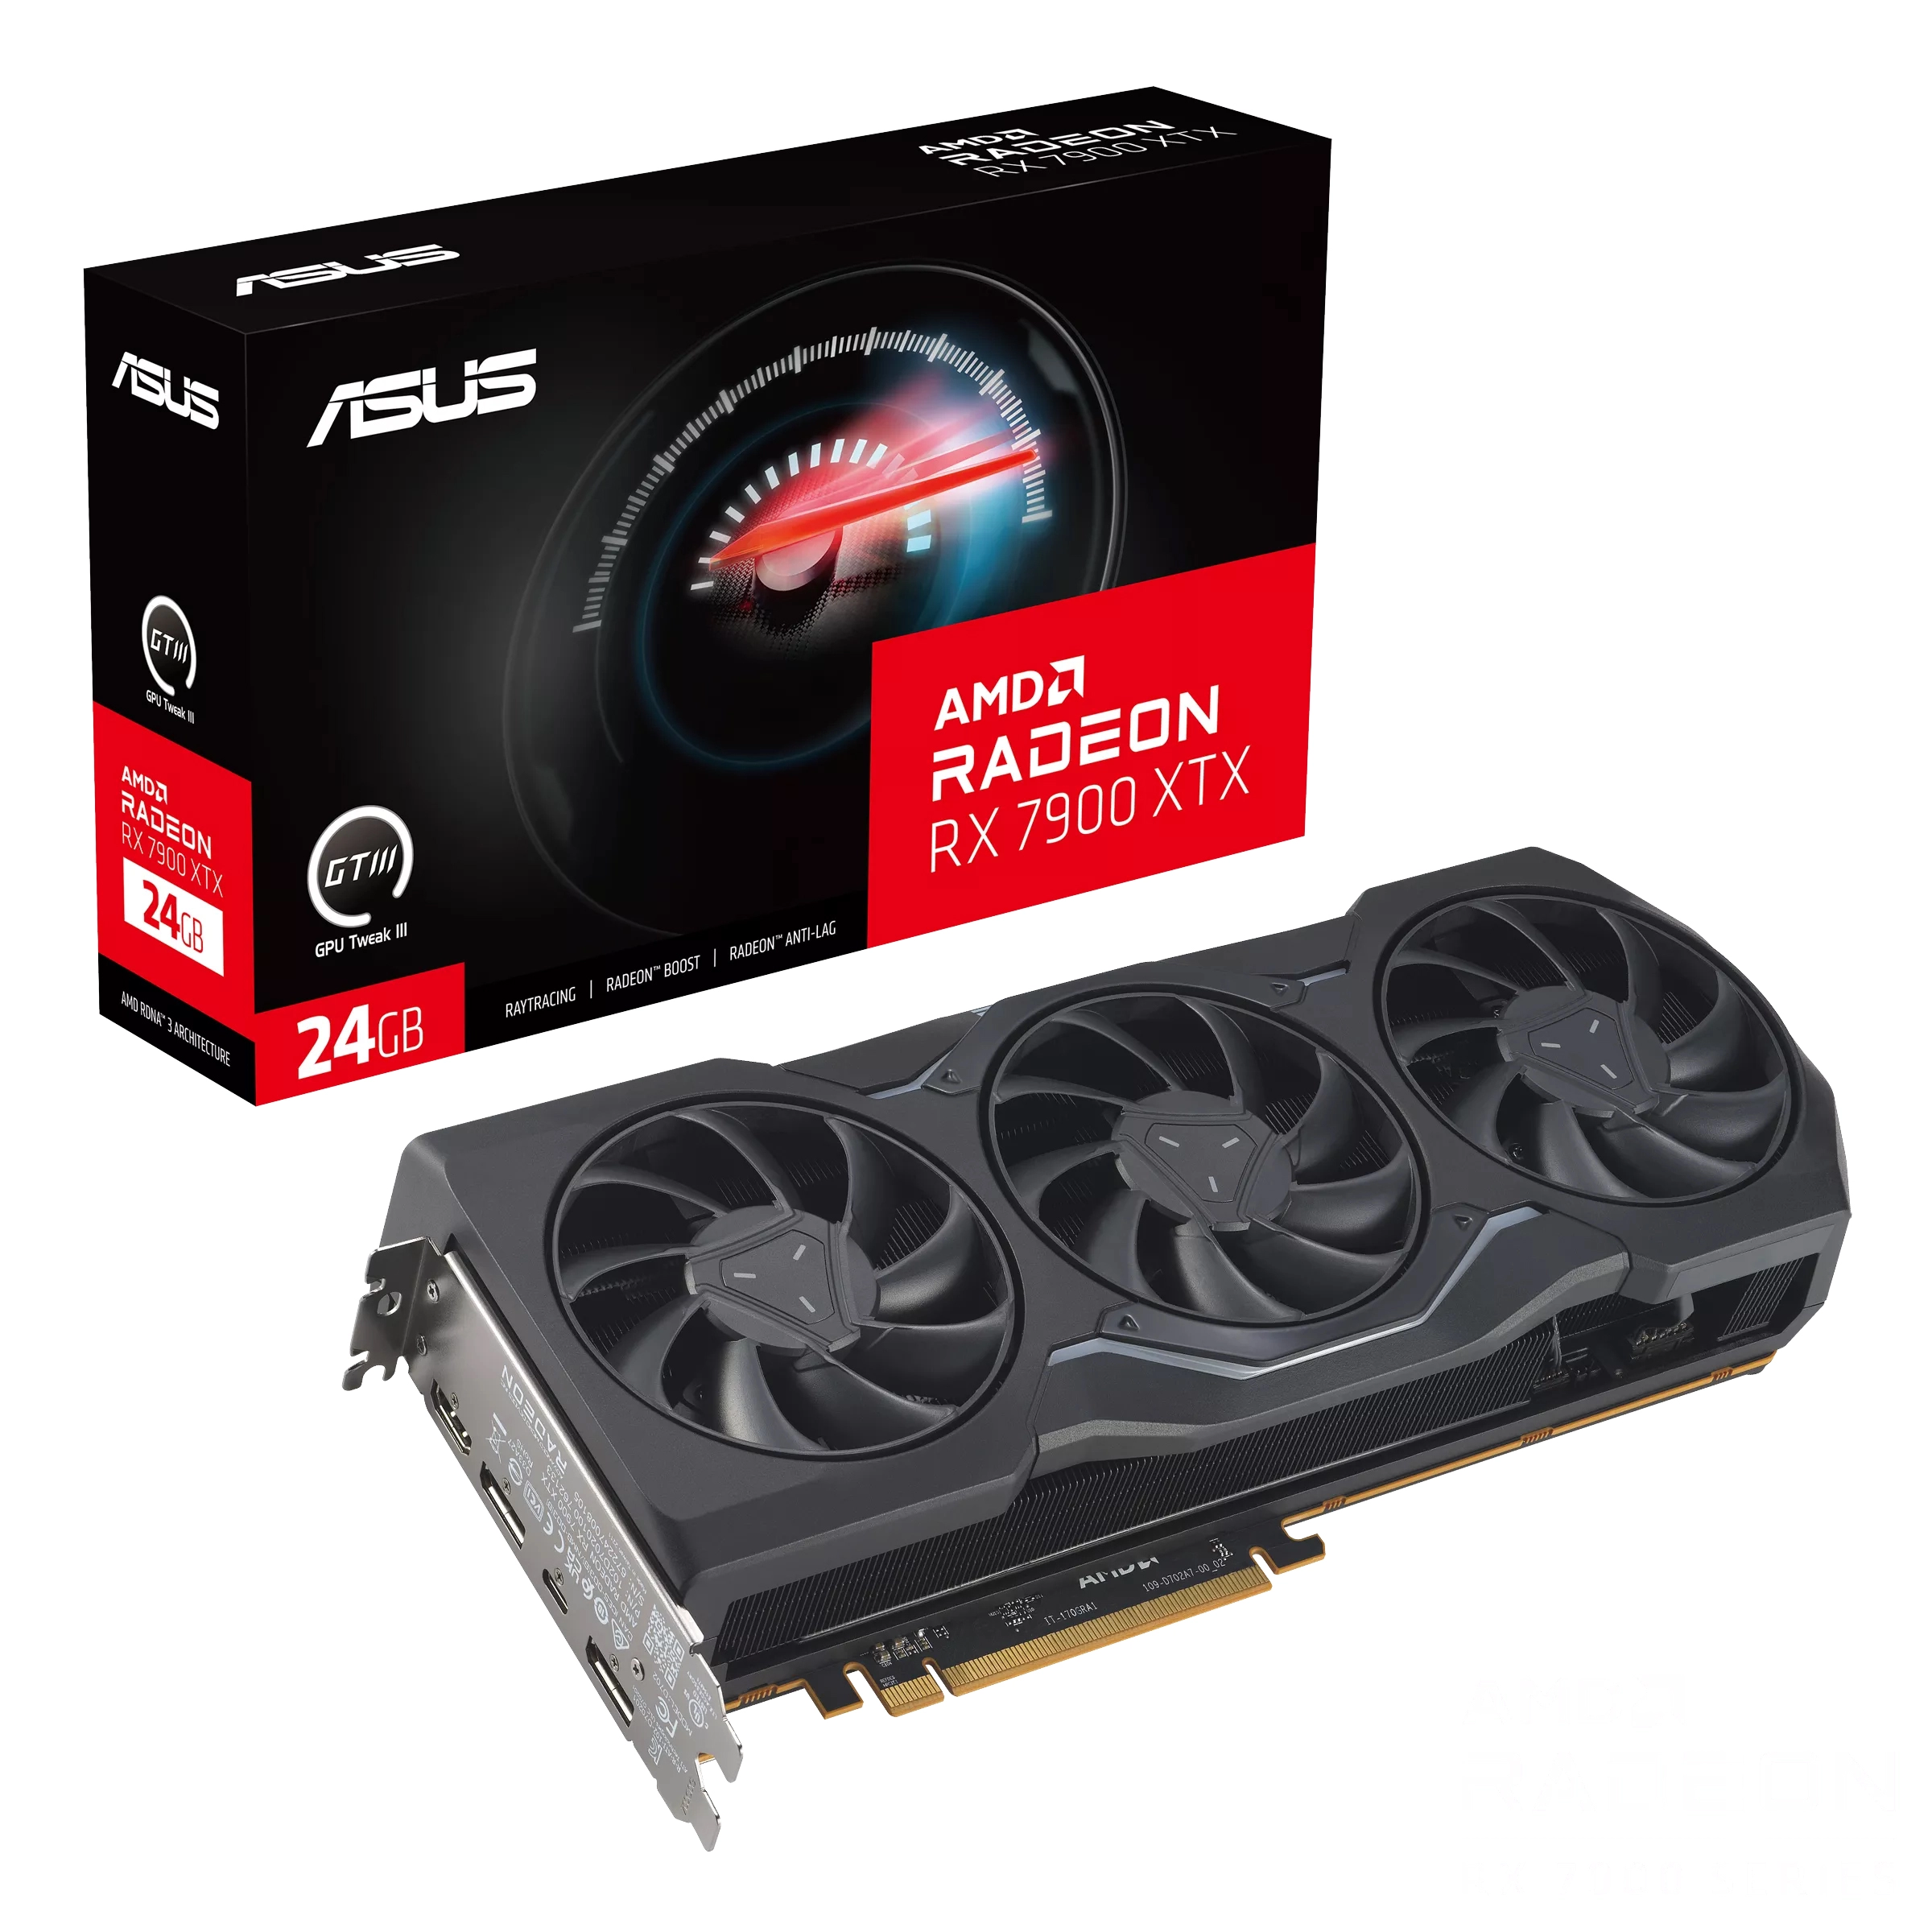 ASUS Radeon RX 7900 XTX 24GB GDDR6 Package